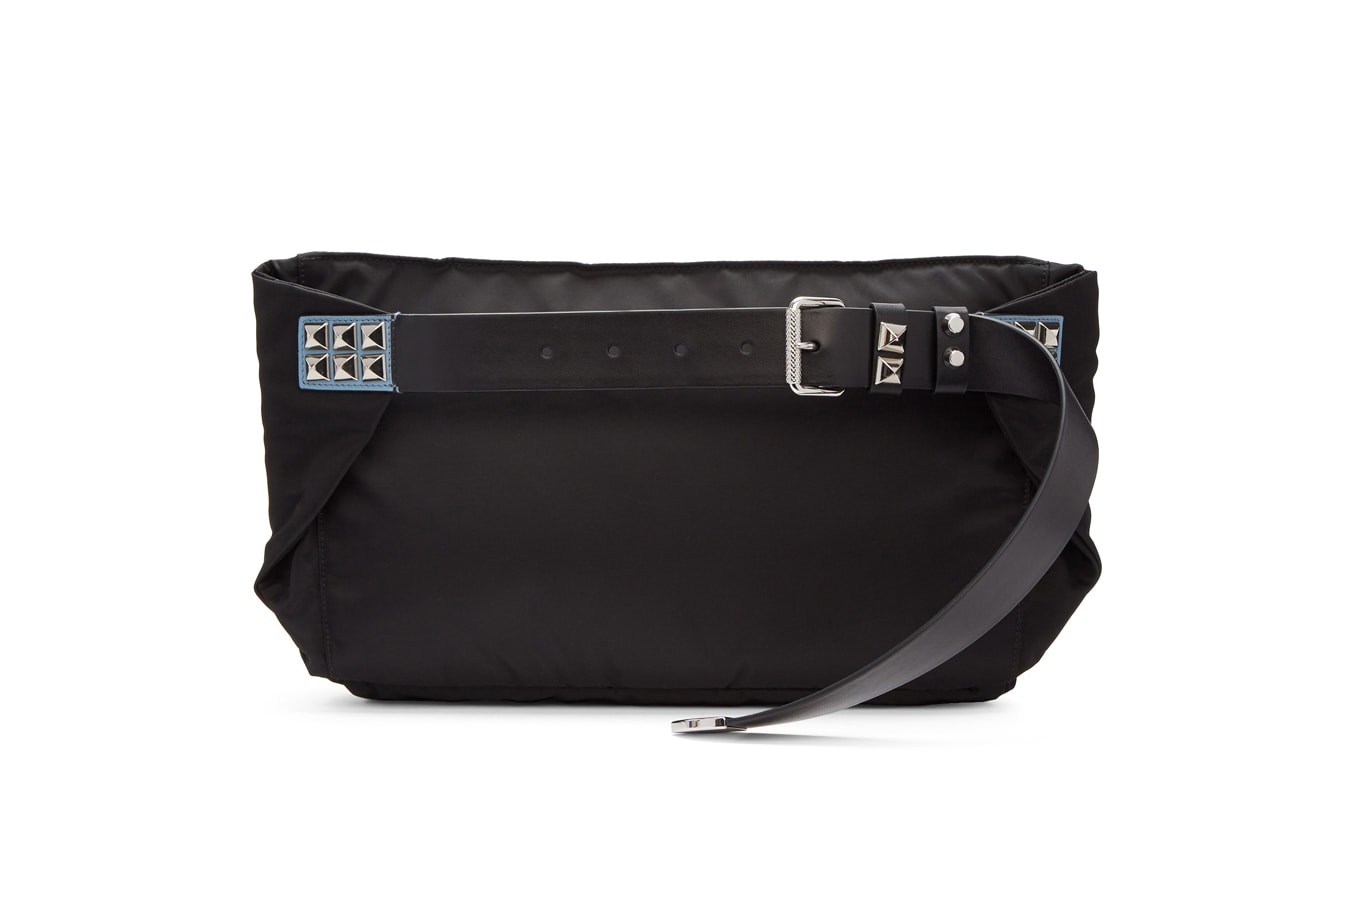 Prada Black/Blue Studded Strap Belt Bag Nylon Bum Bag Fanny Pack